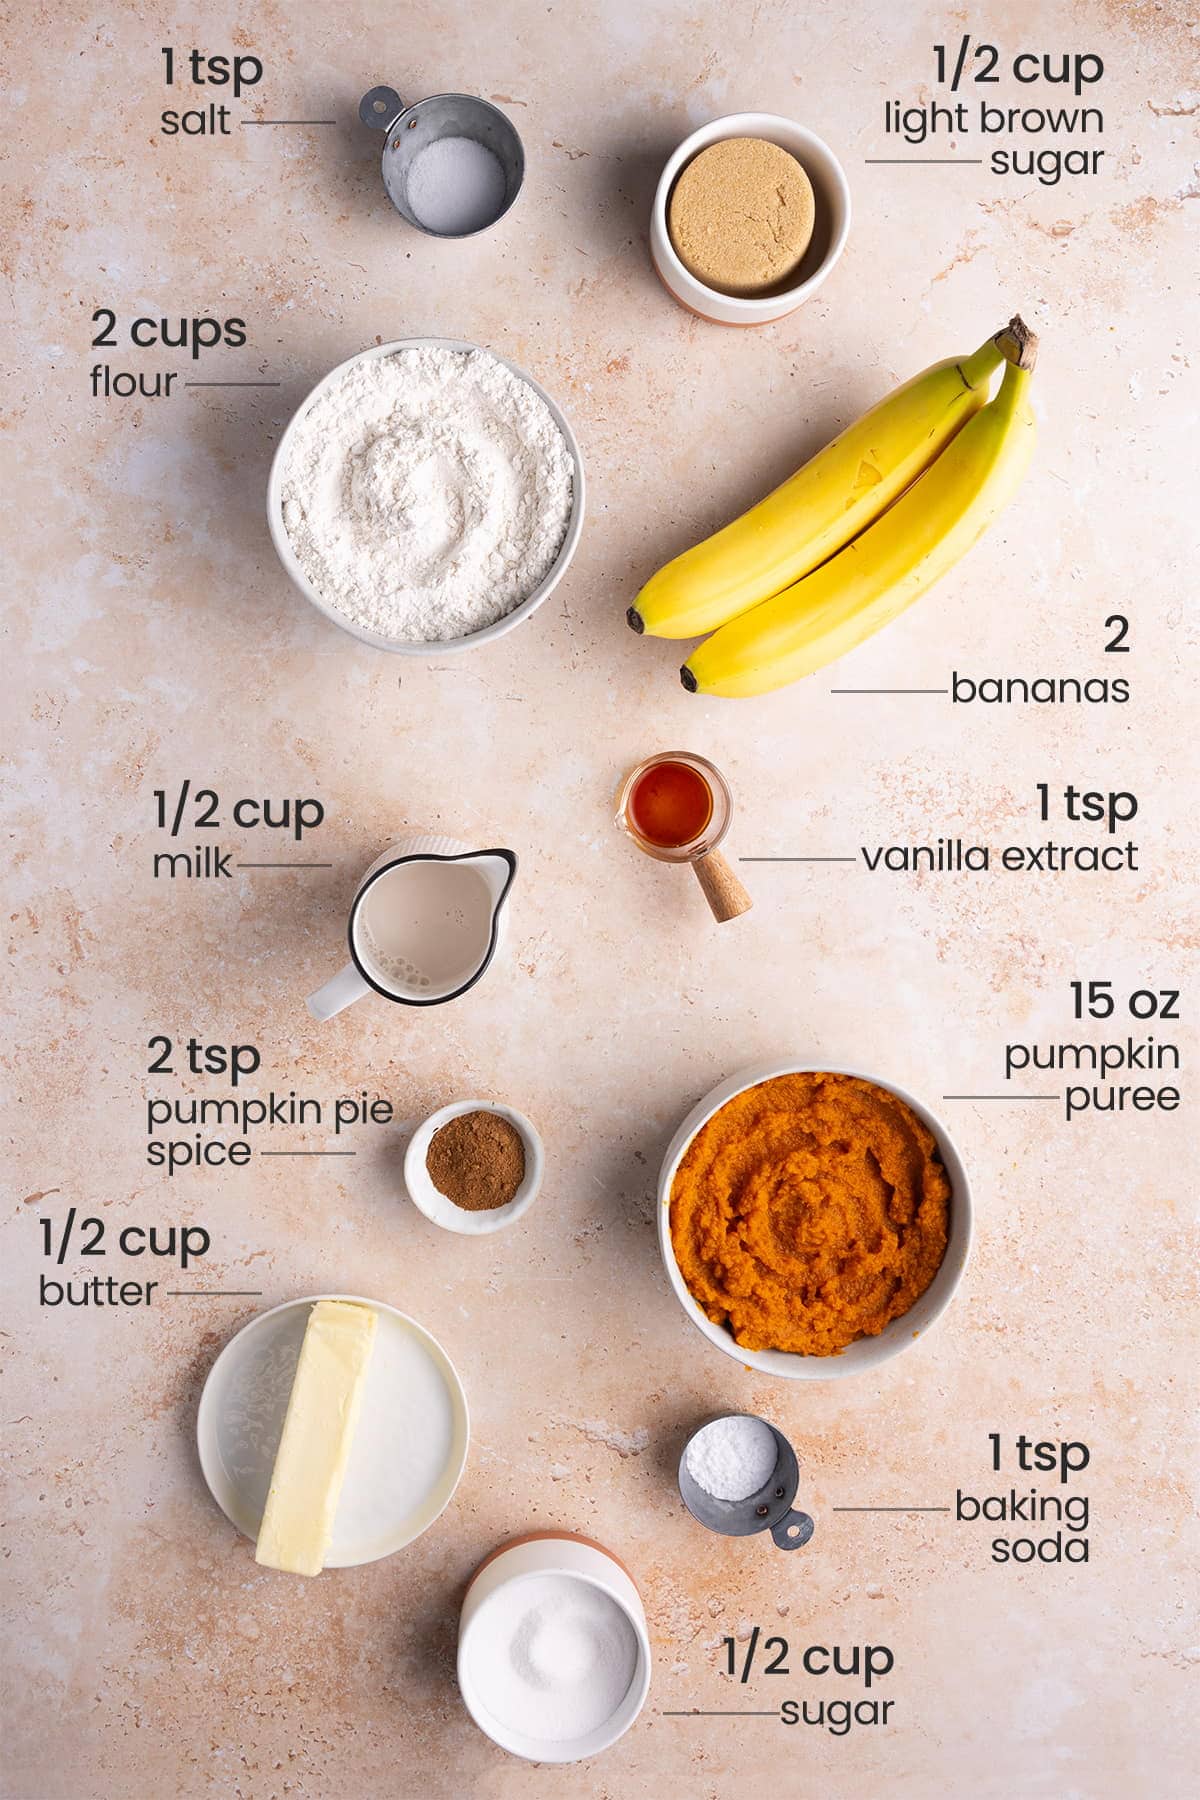 All ingredients needed for Pumpkin Banana Muffins including salt, brown sugar, granulated sugar, bananas, pumpkin pie spice, vanilla extract, milk, pumpkin puree, unsalted butter, and salt